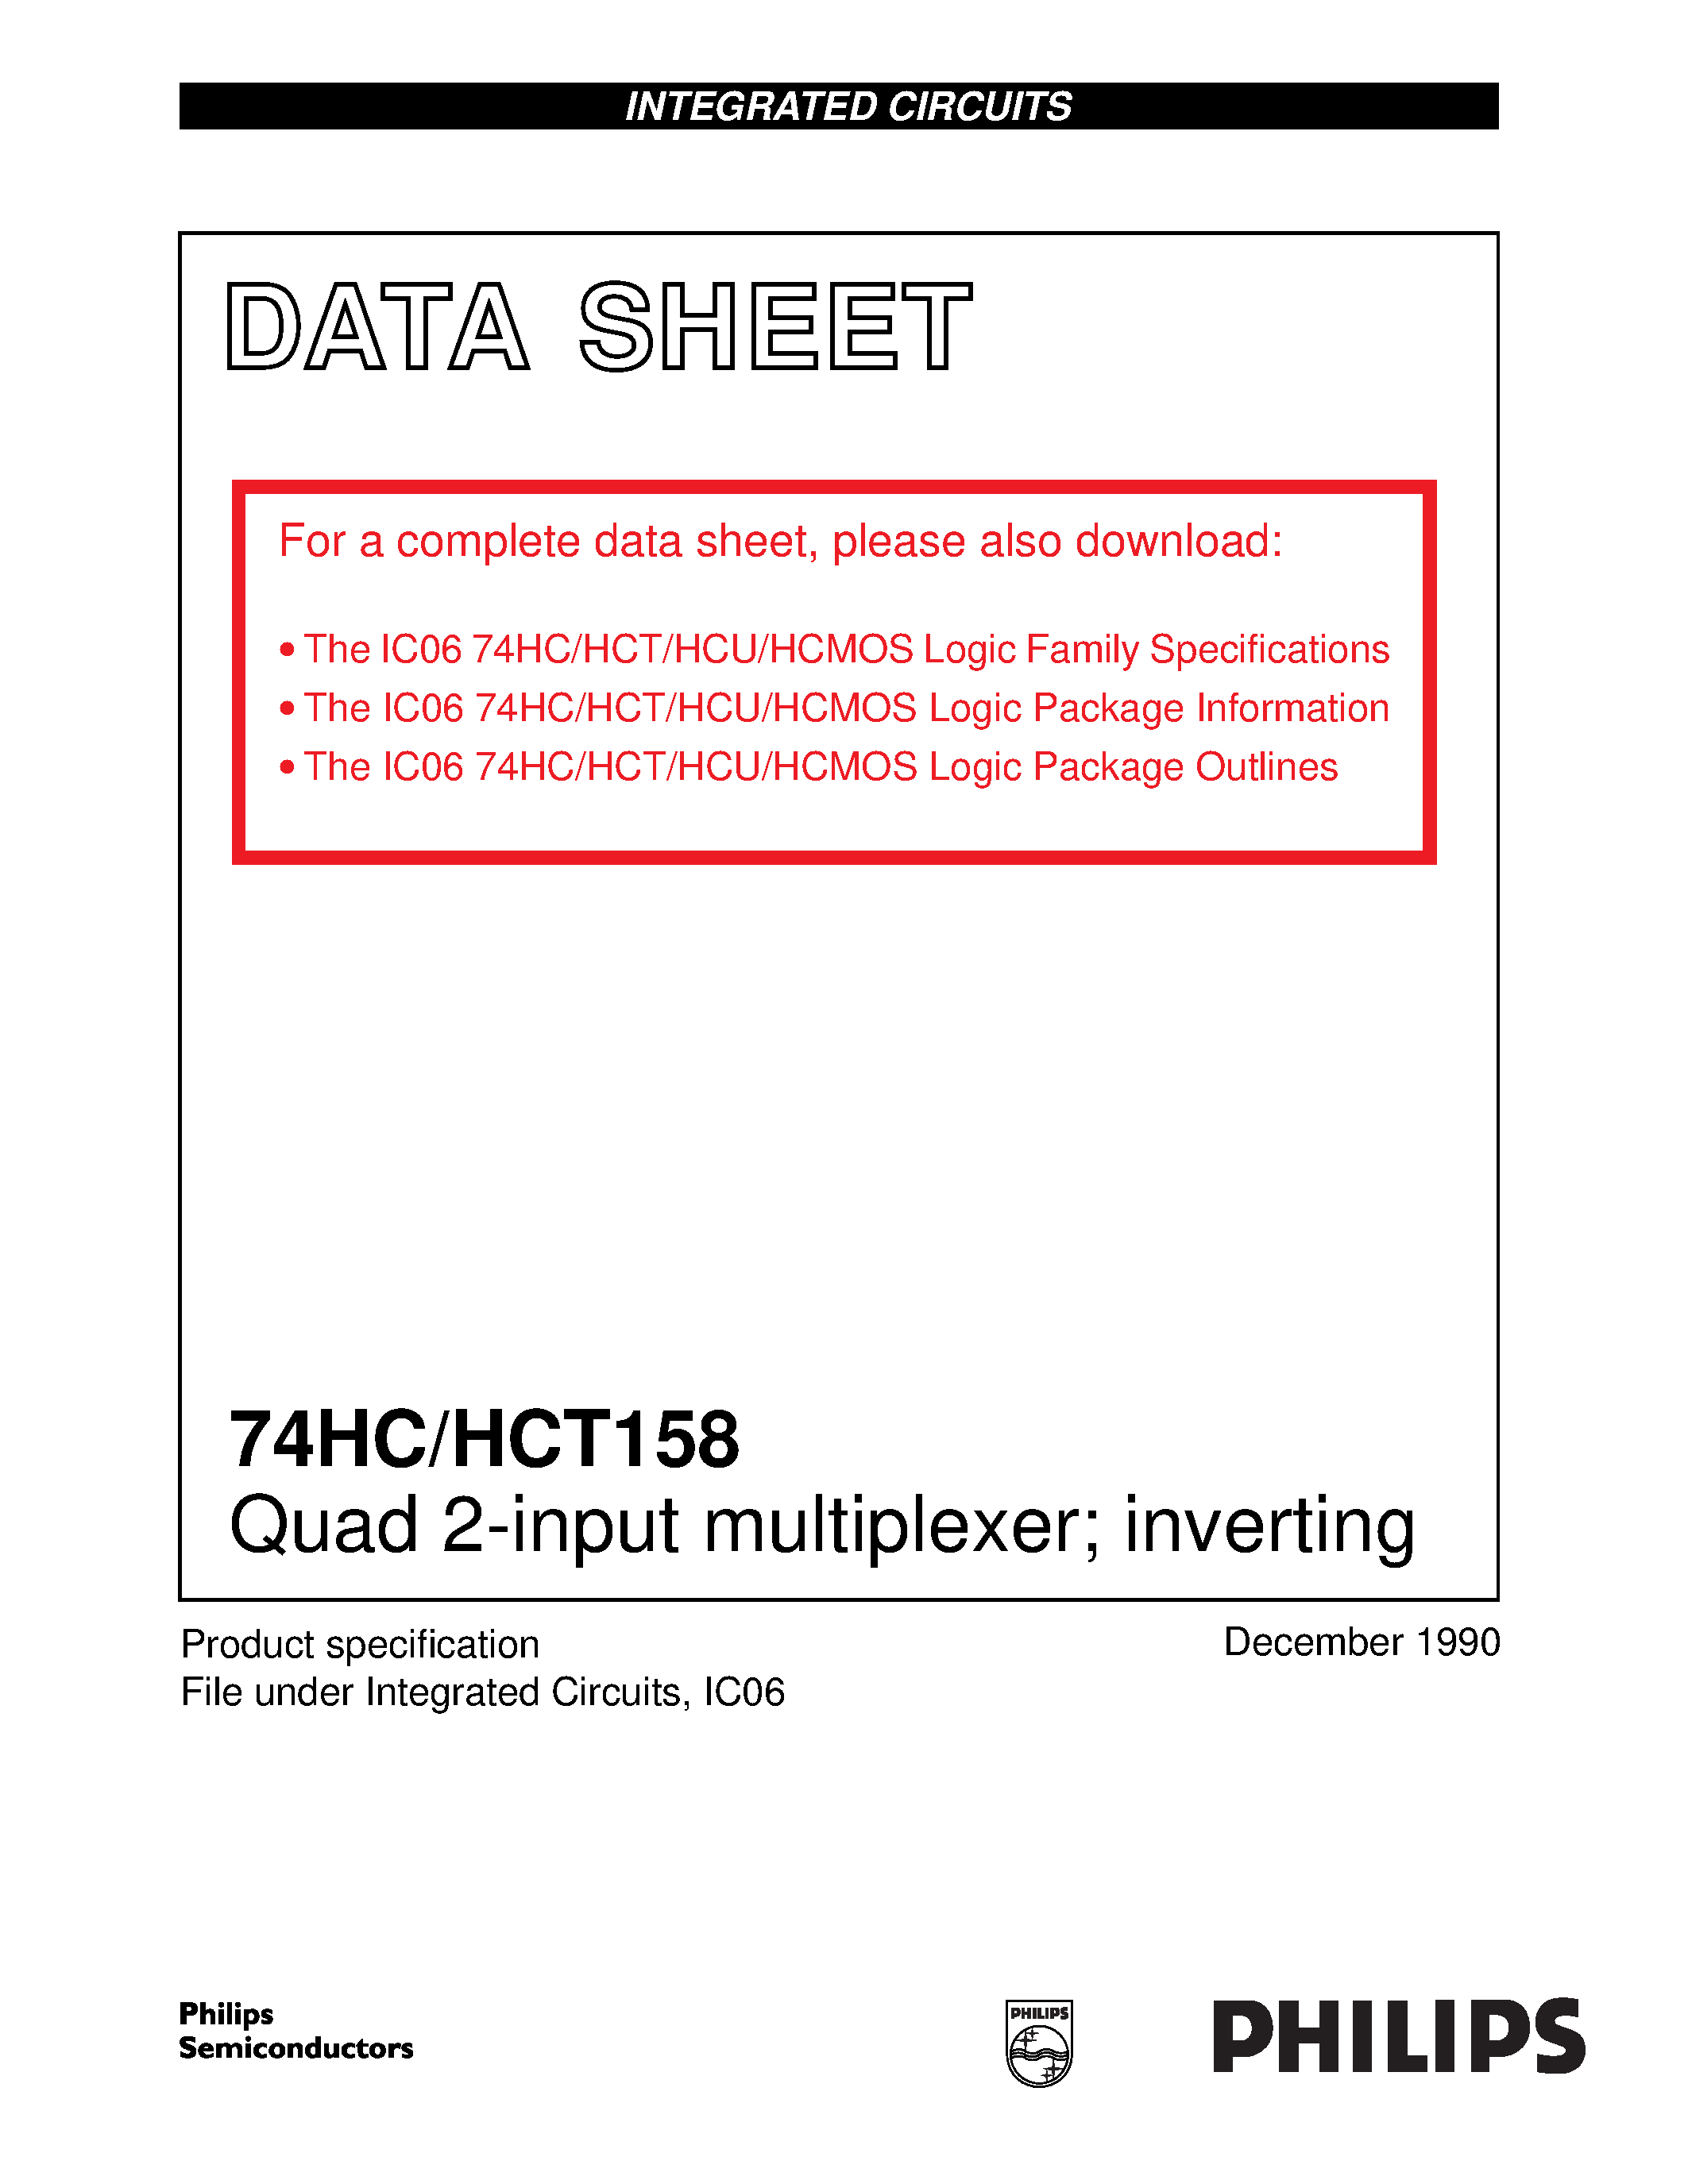 Даташит 74HCT158 - Quad 2-input multiplexer inverting страница 1